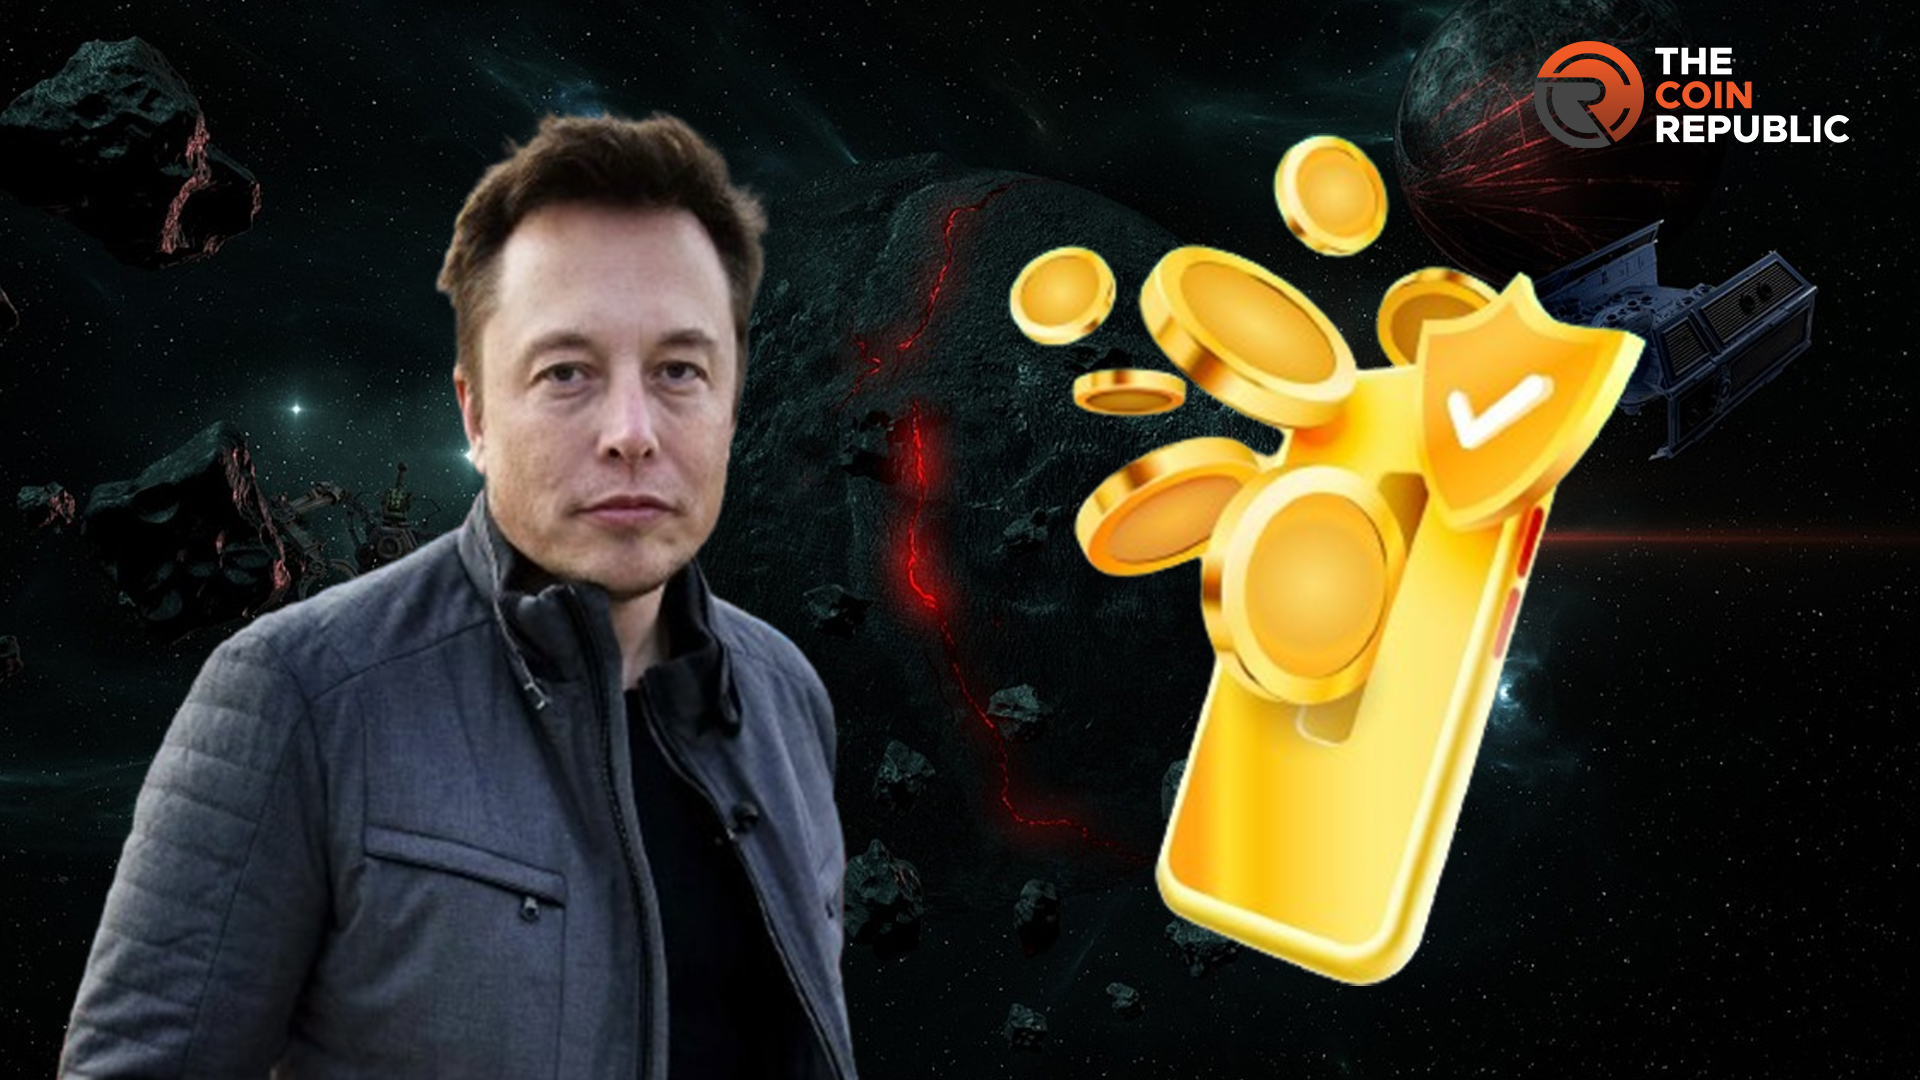 Elon Musk Foresees ‘Digital Gods’ as AI Revolution Sparks